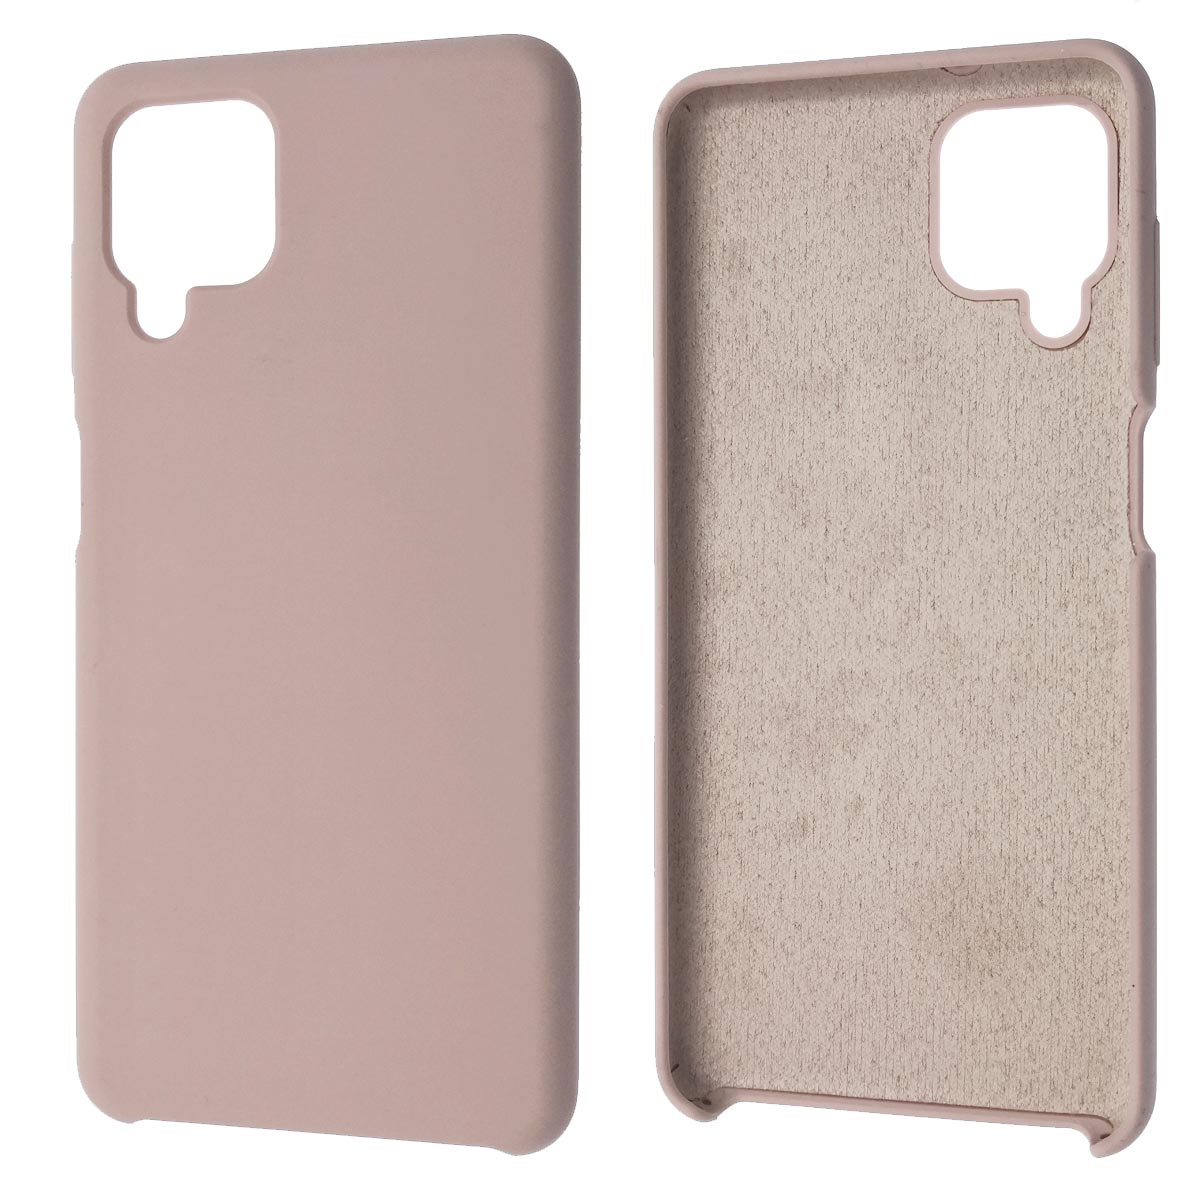 Чехол накладка Silicon Cover для SAMSUNG Galaxy A12 (SM-A125), силикон, бархат, цвет розовый песок